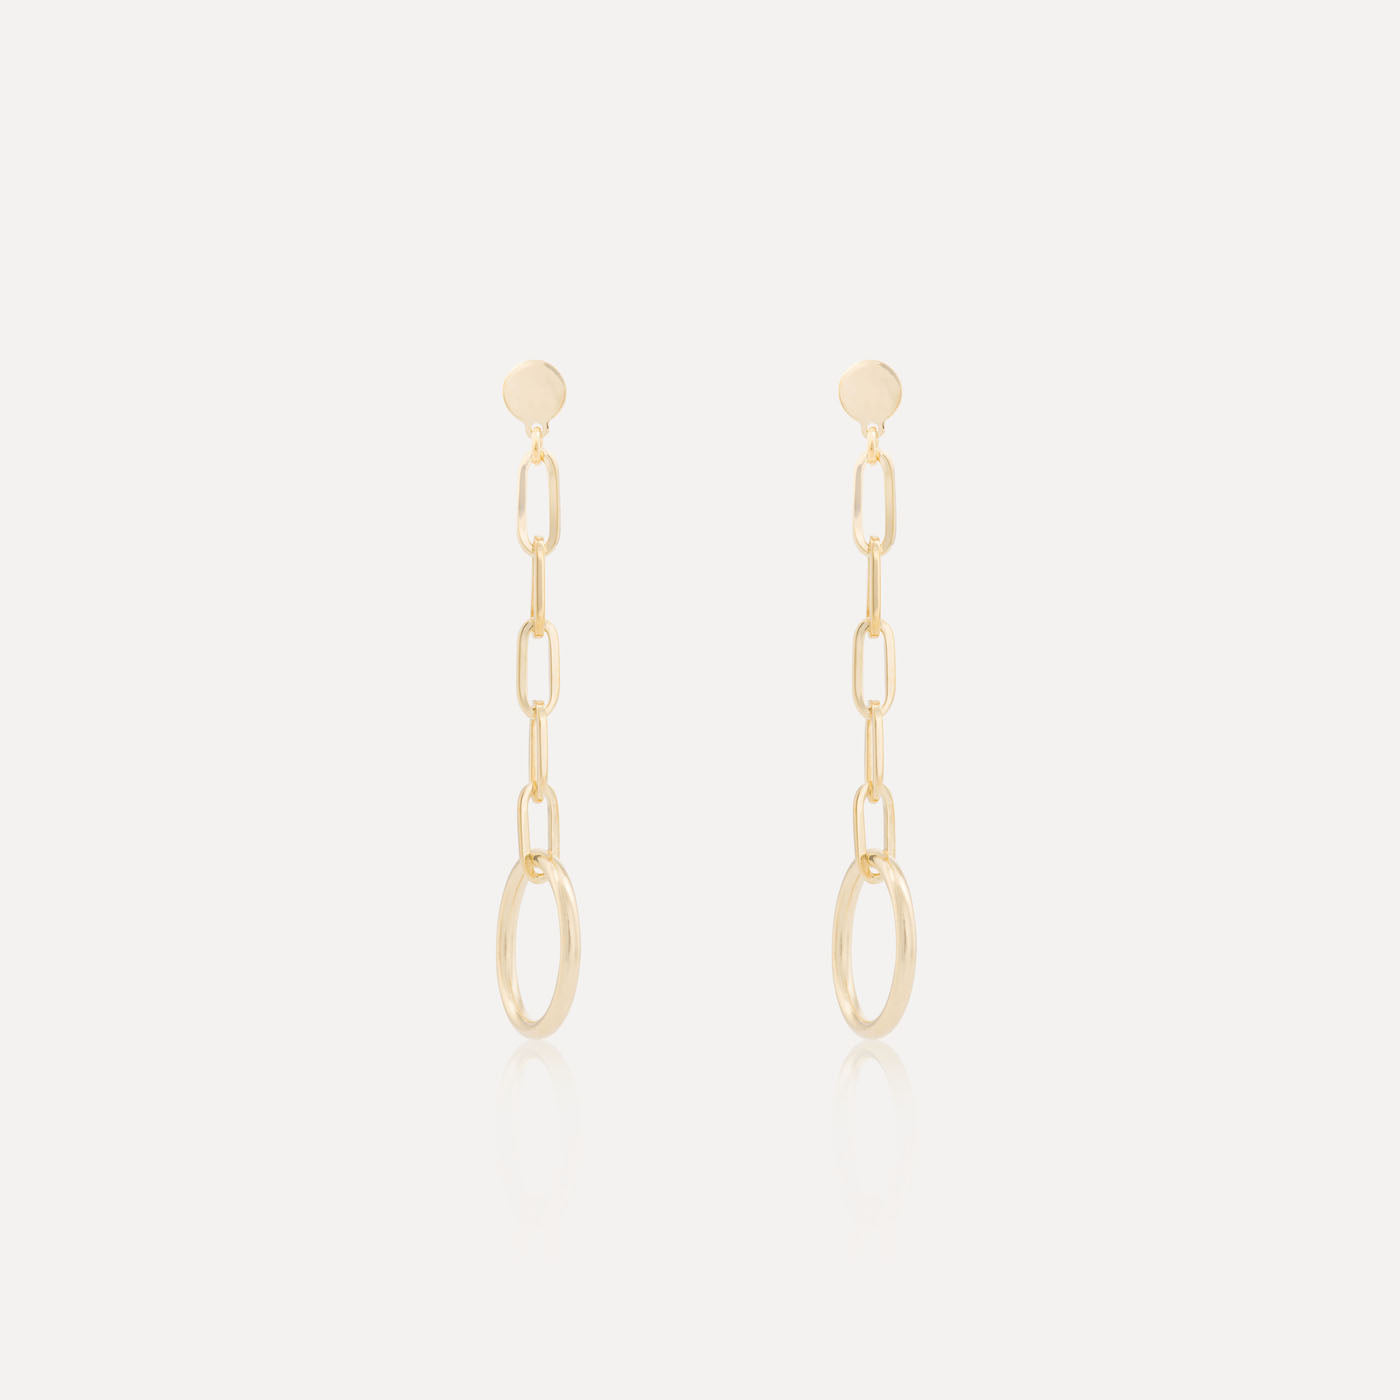 9ct Gold Circ Drop Chain Earrings